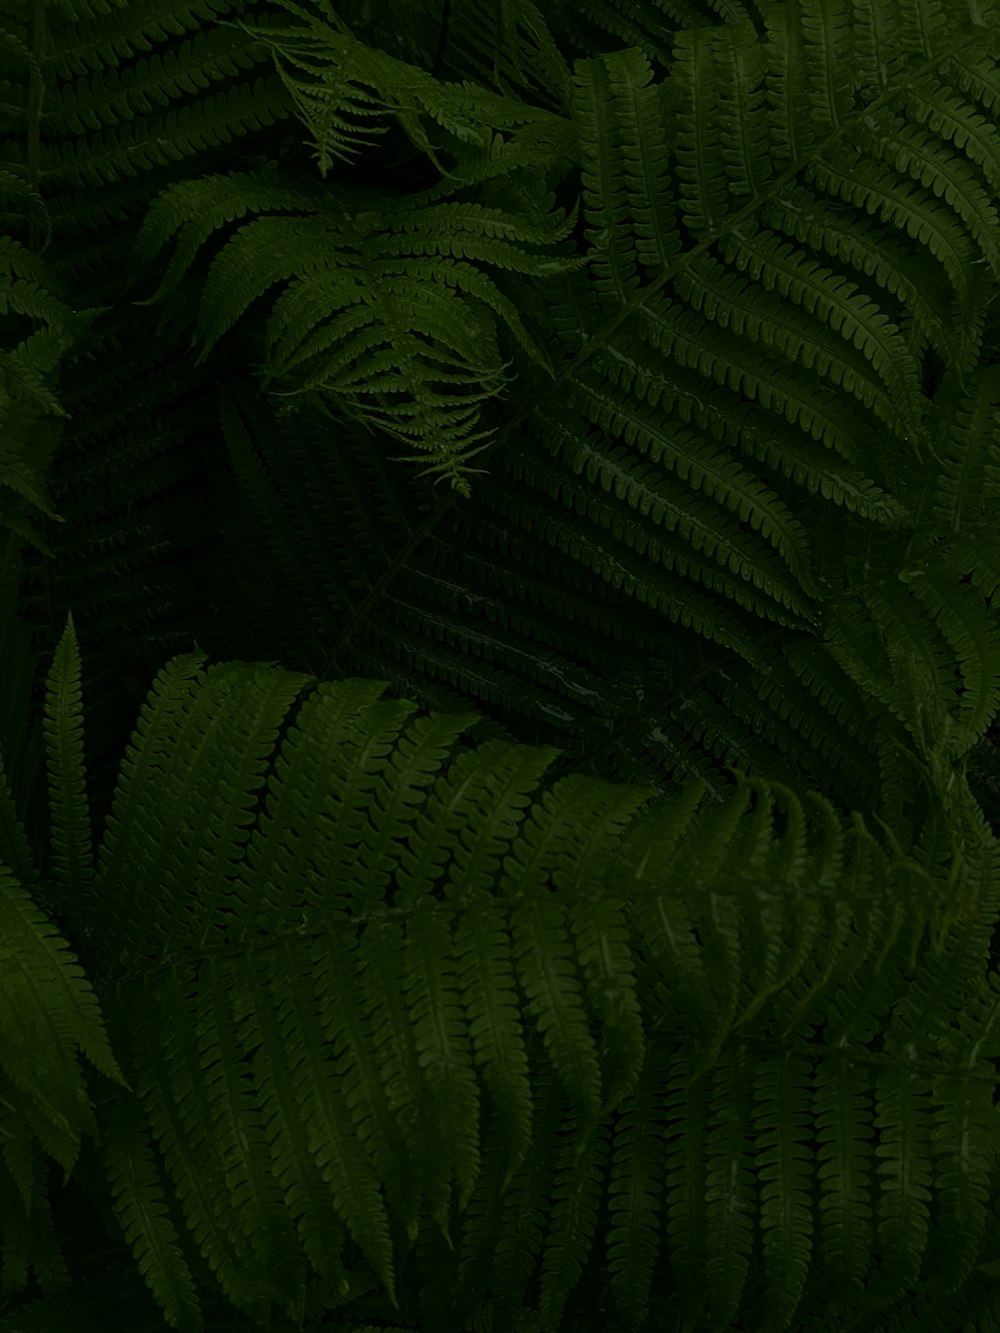 pianta di felce verde in fotografia ravvicinata